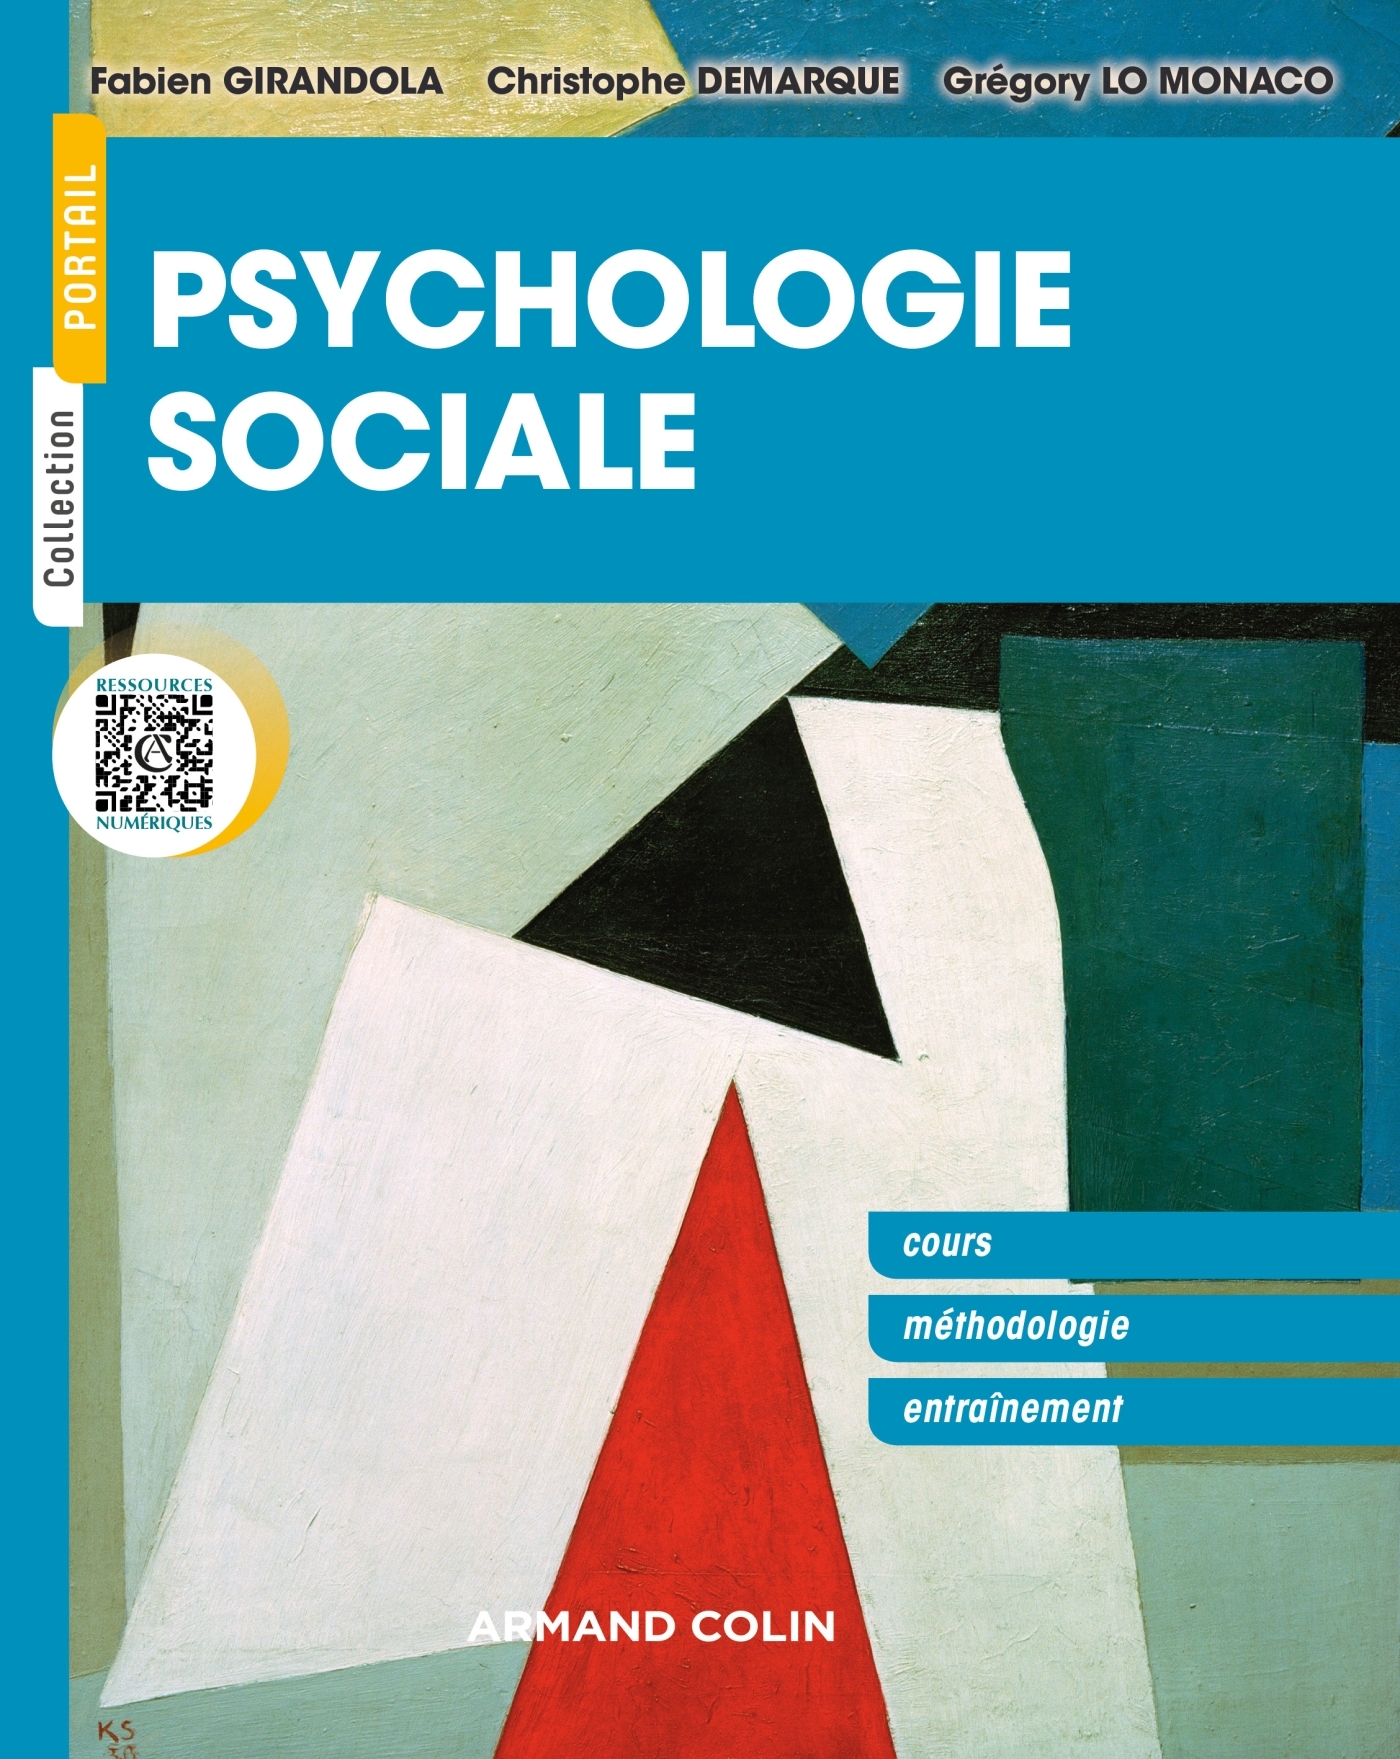 Psychologie sociale (9782200620387-front-cover)